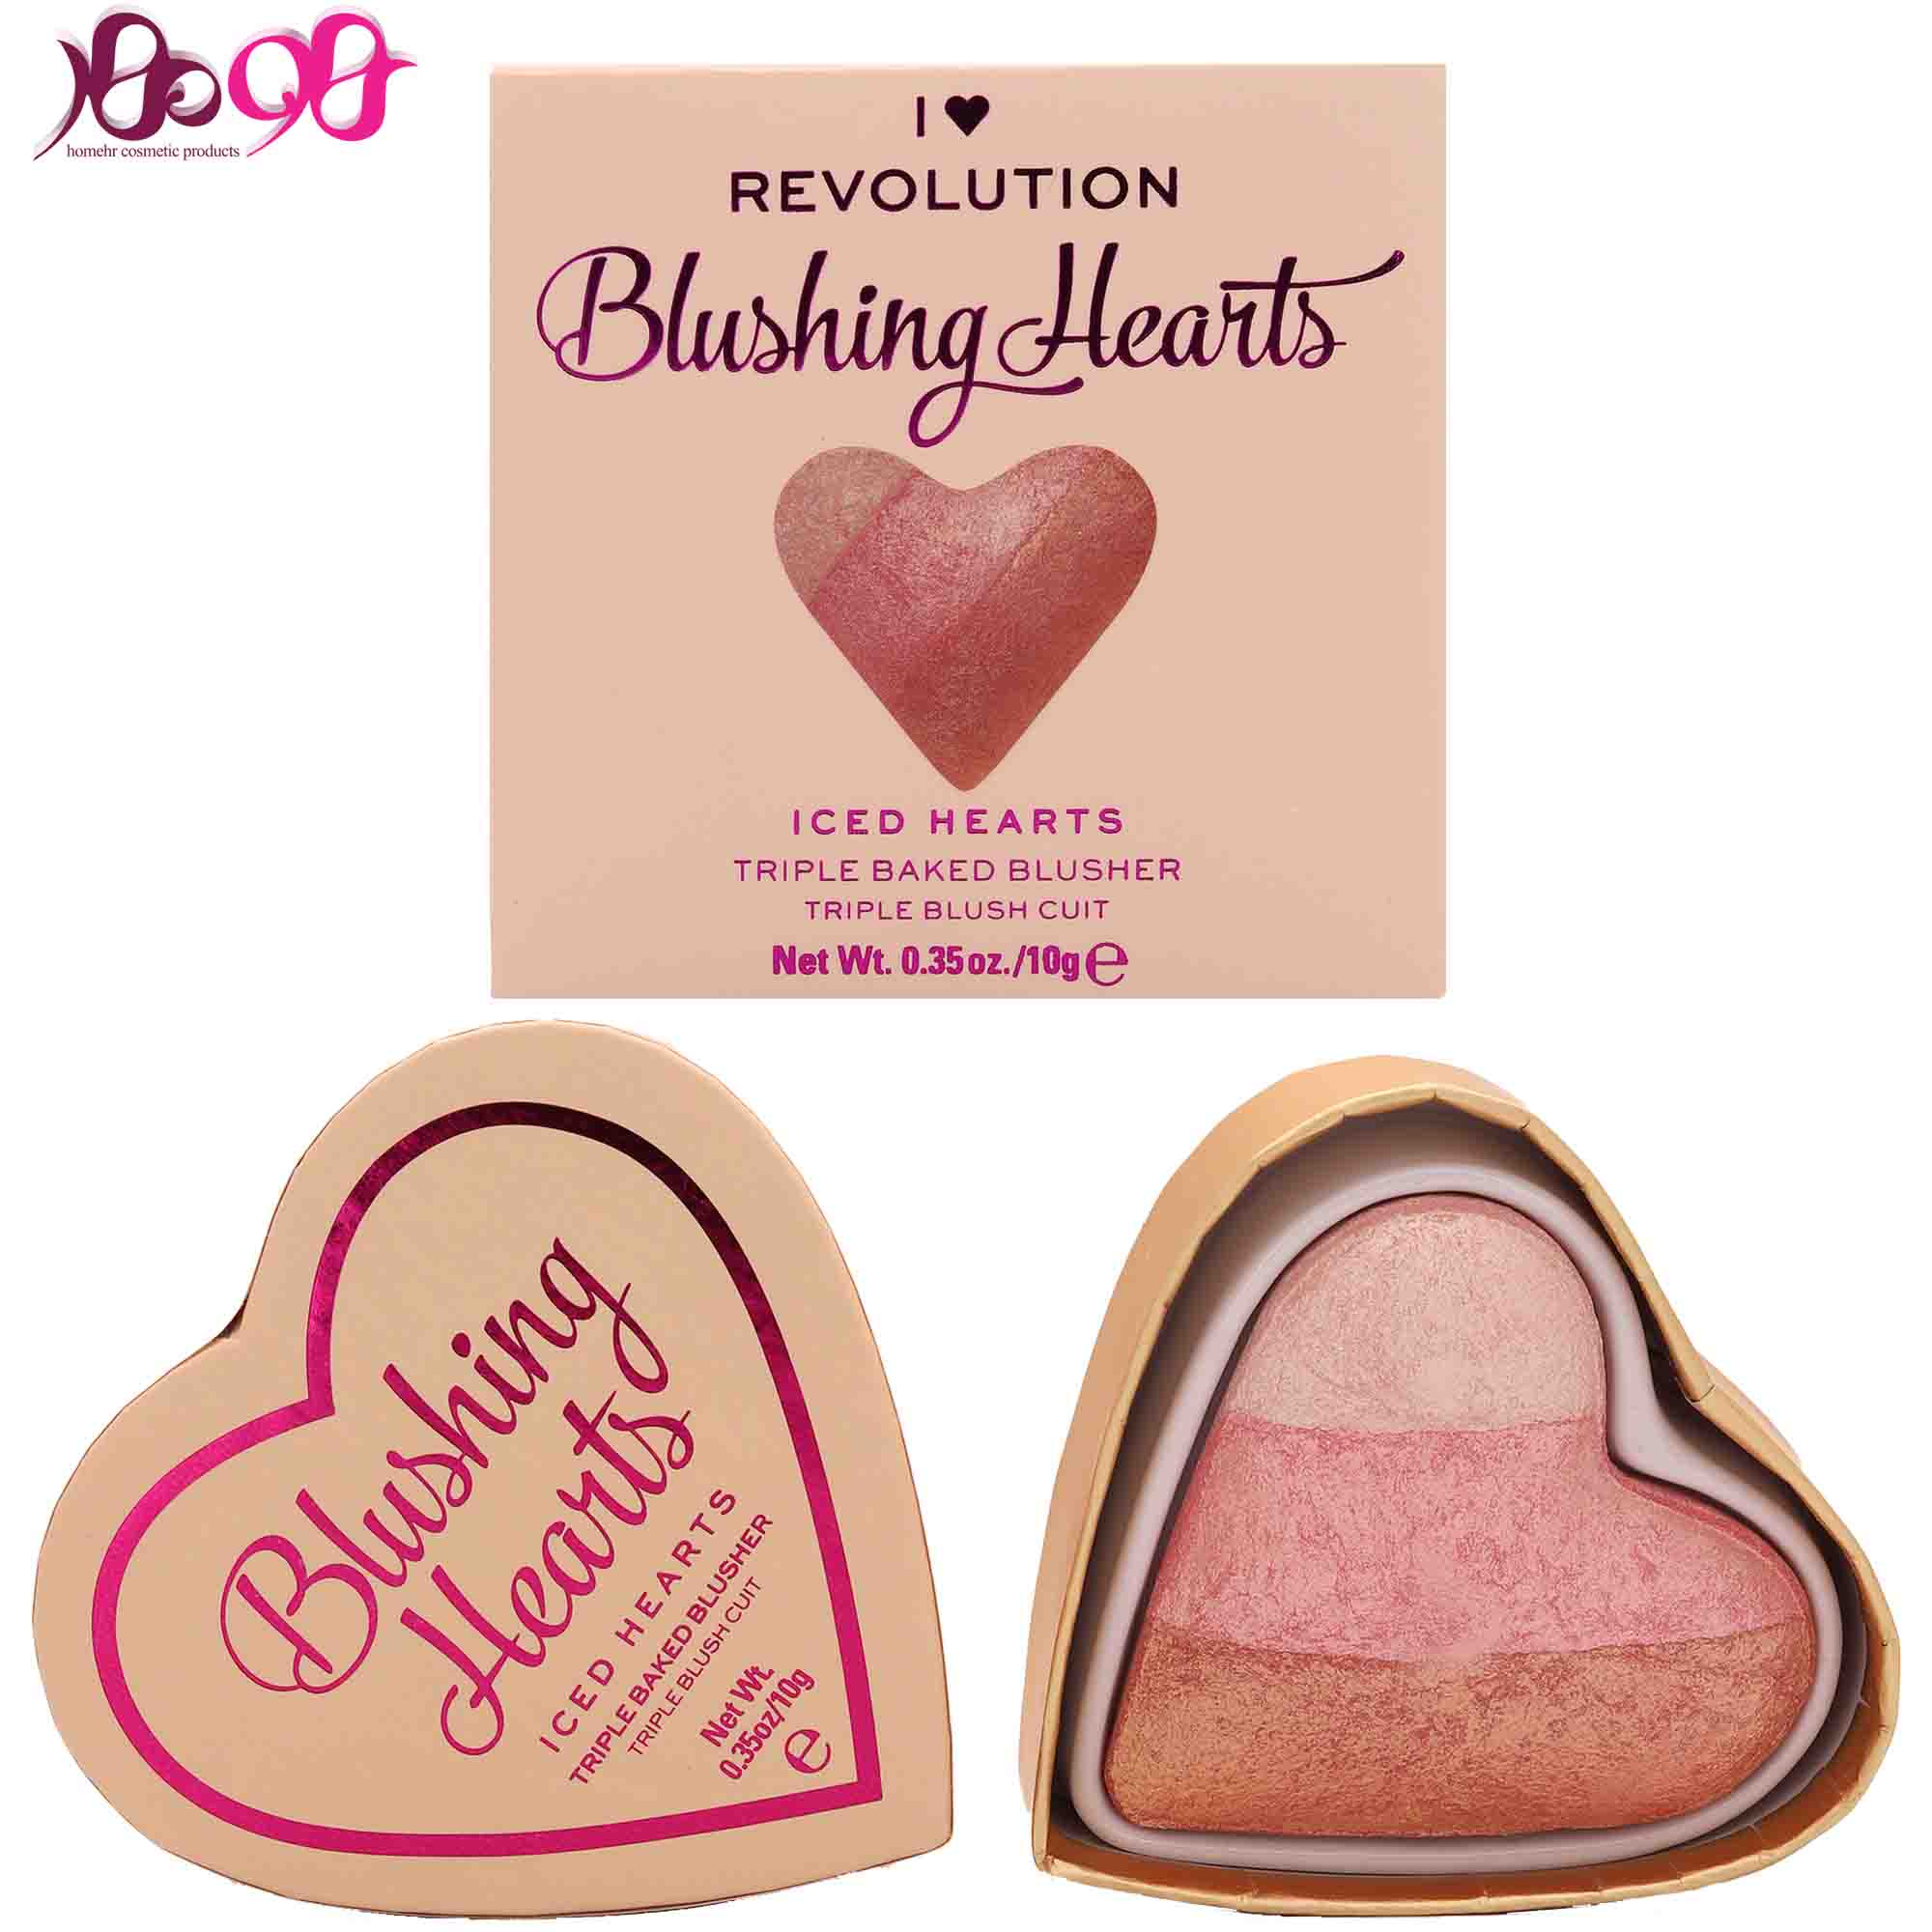 رژ-گونه-قلبی-رولوشن-blushing-hearts-حجم-10-گرم-revolution